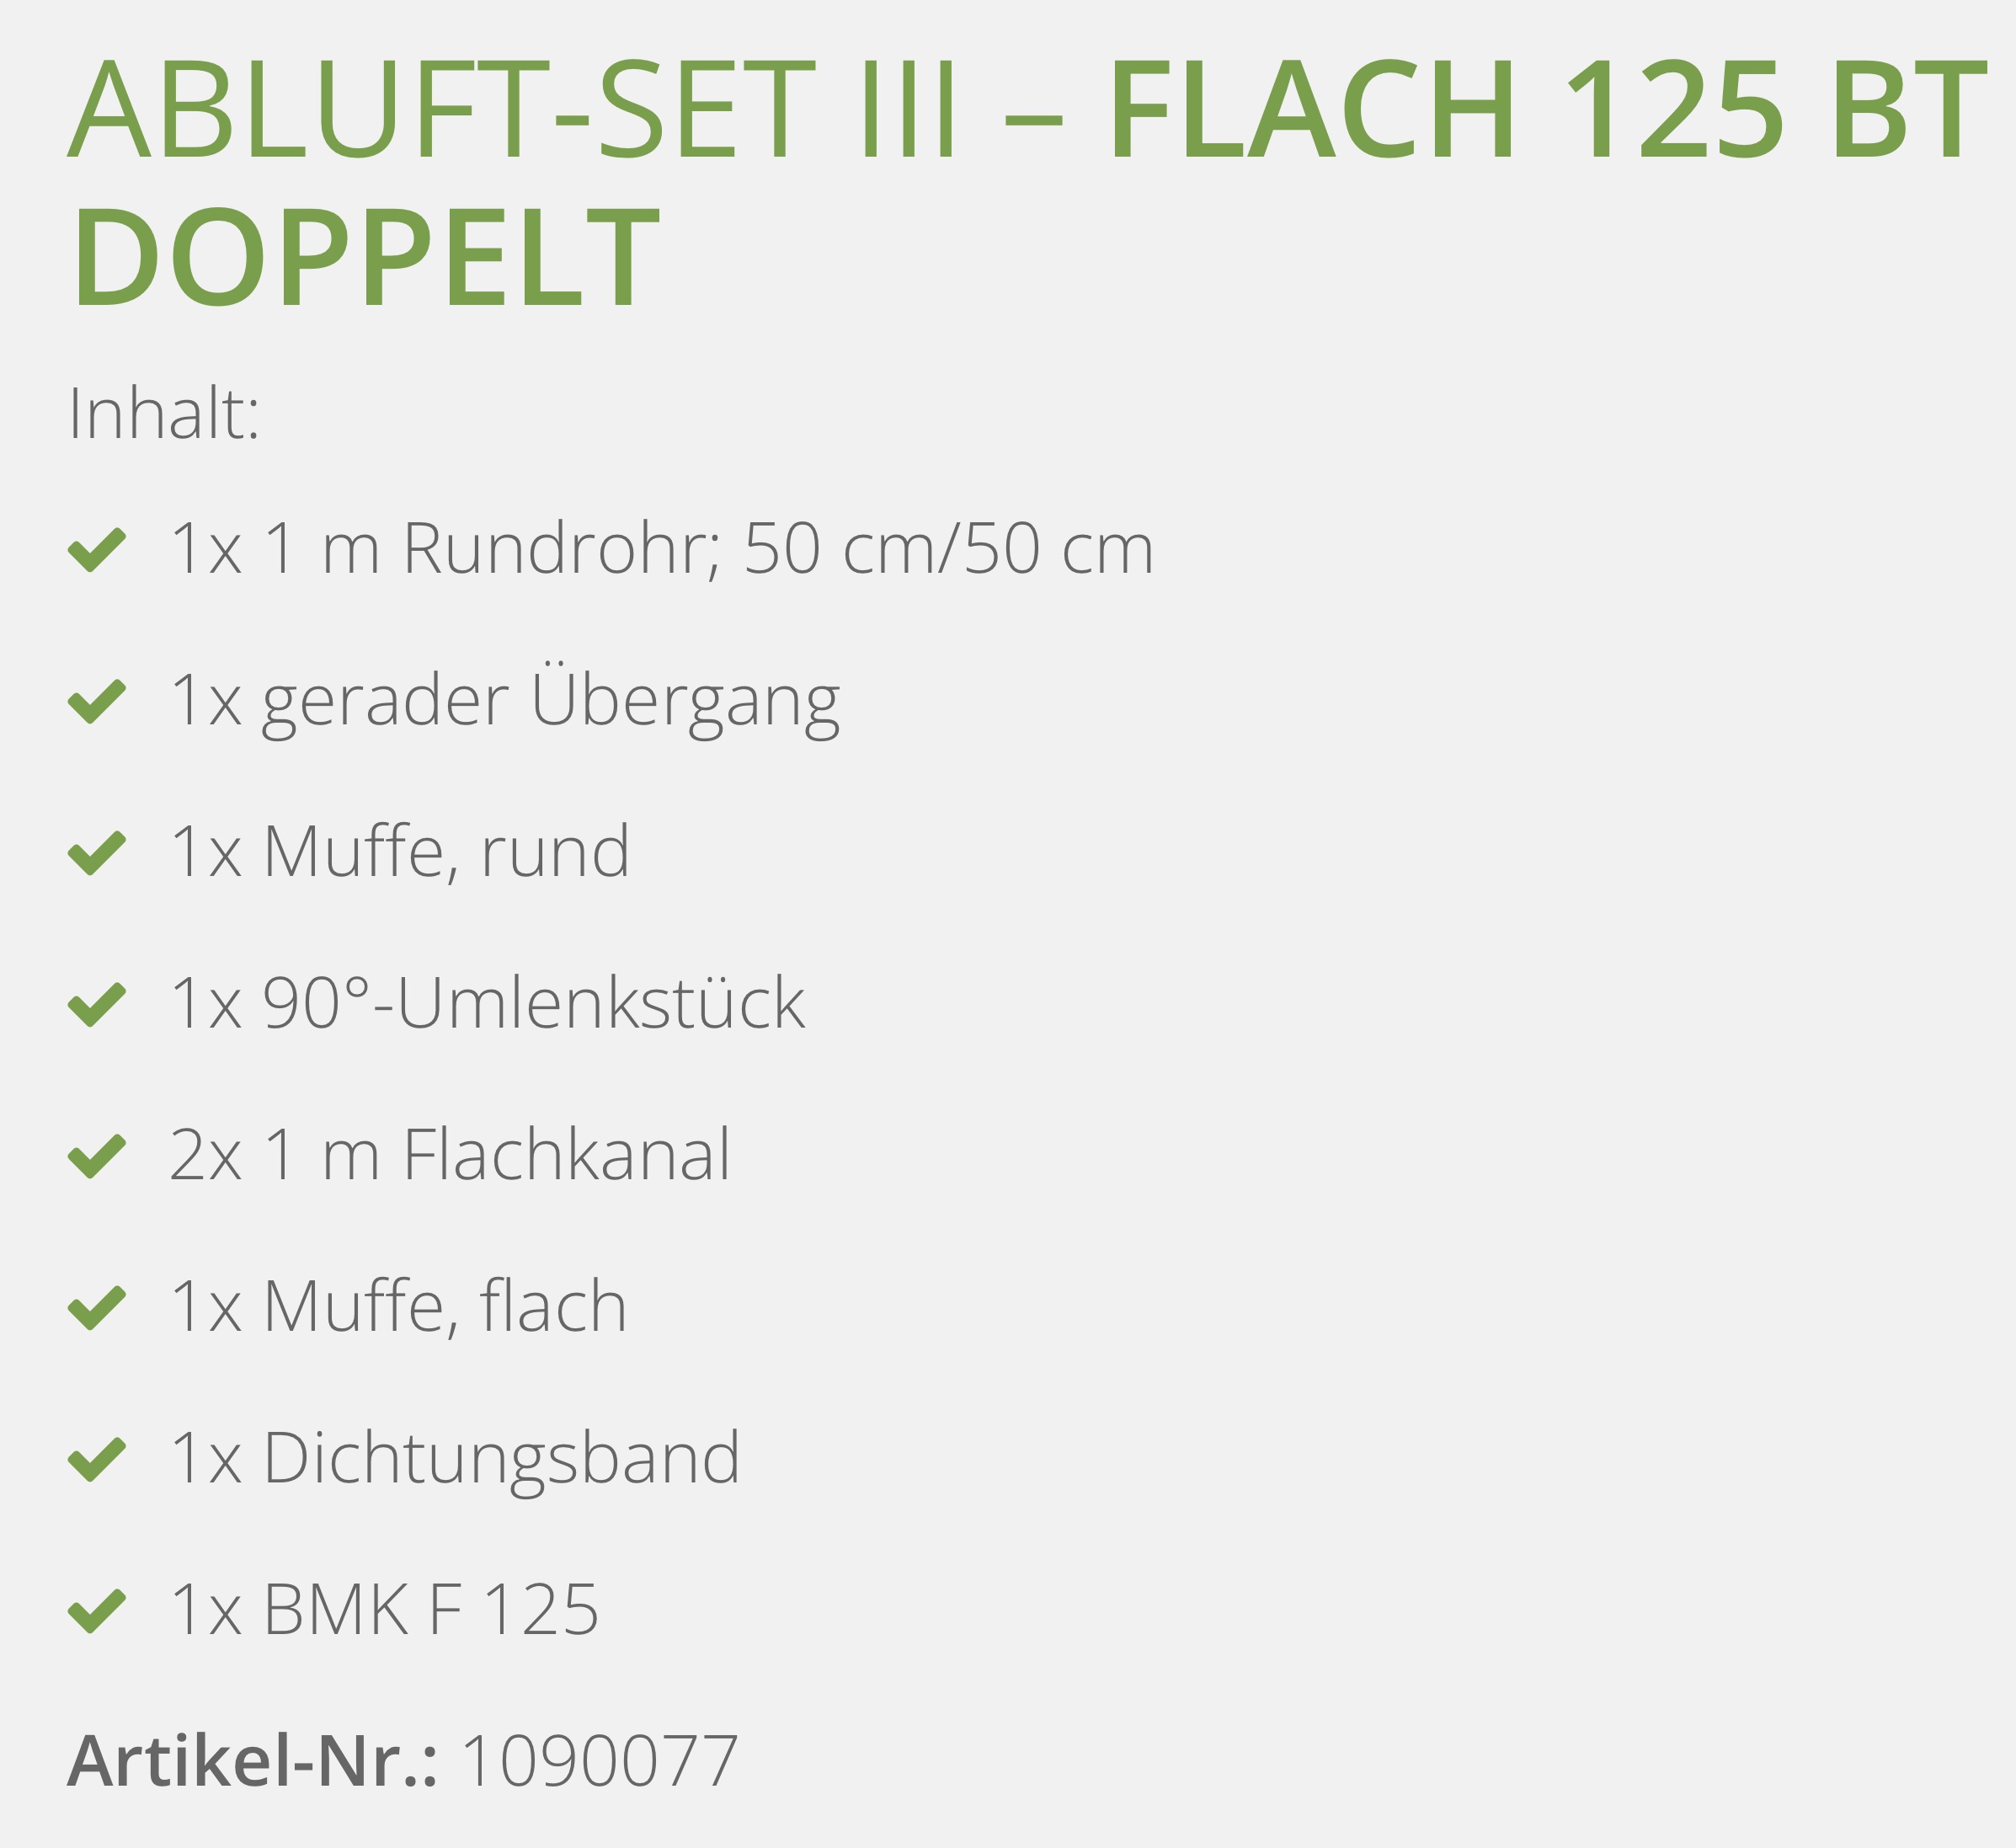 Berbel Abluft-Set III Flach 125 bT 1090077